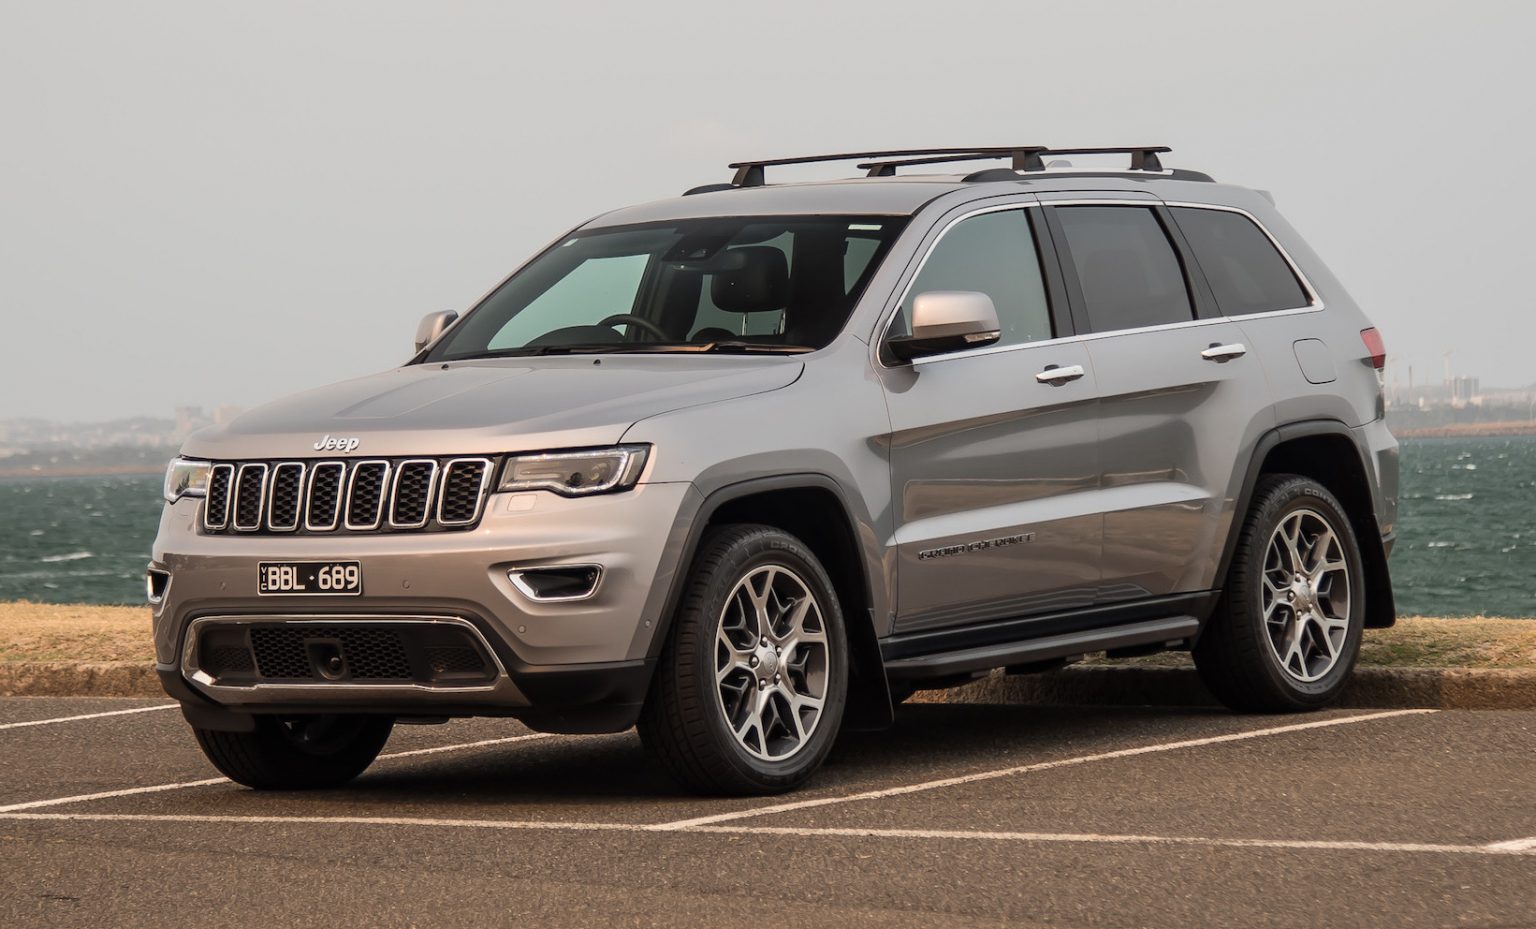 2020 Jeep Grand Cherokee Limited diesel review video PerformanceDrive